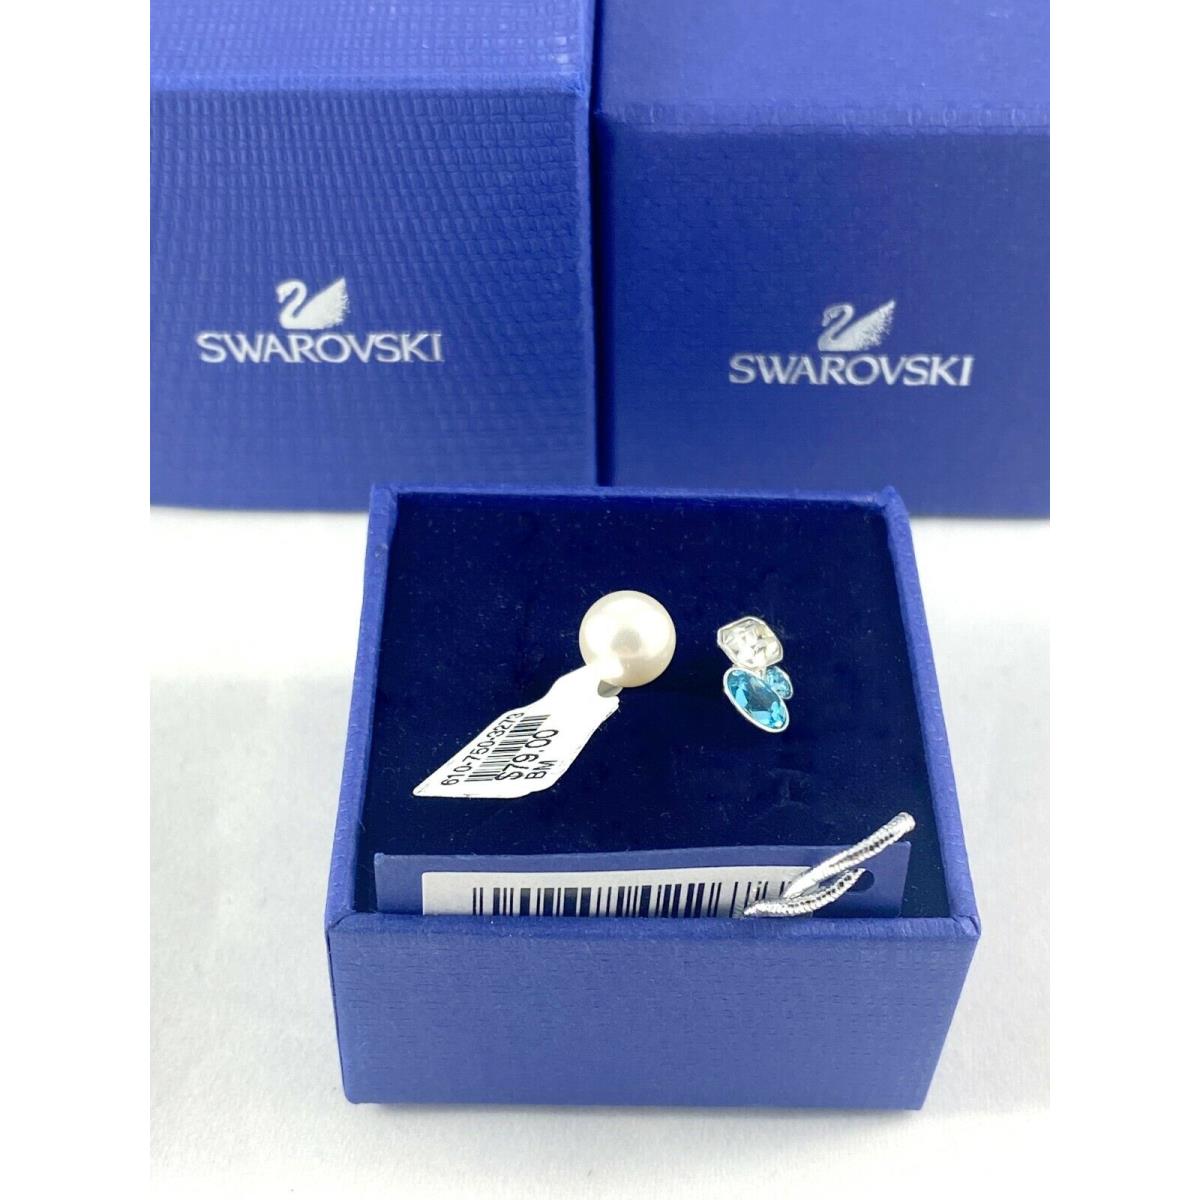 Swarovski Swarvoski Ring Pearl and Crystals 5202267 Size 6.75